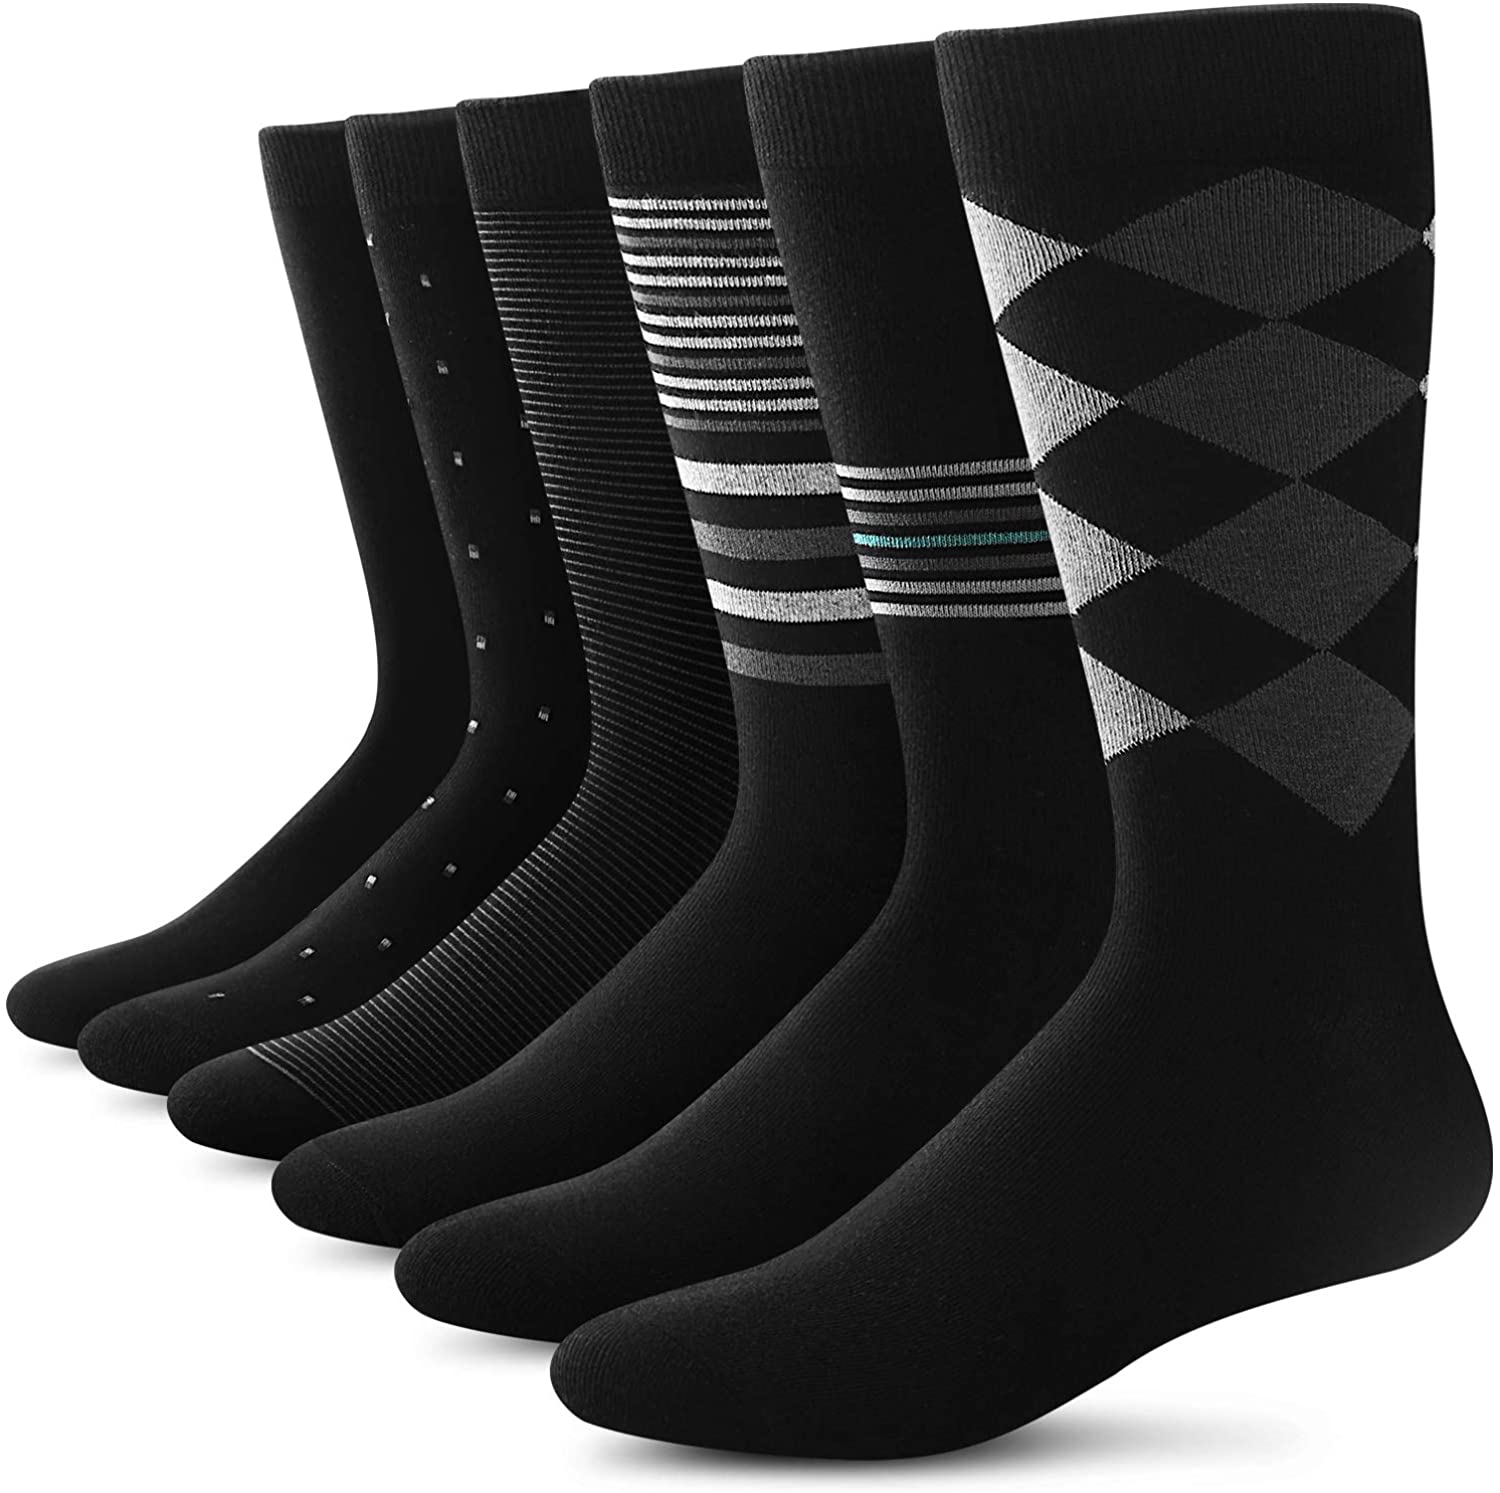 Mens Crew Socks Black Color Dress Socks 6 Pairs Lot Wholesale Spandex Size New 